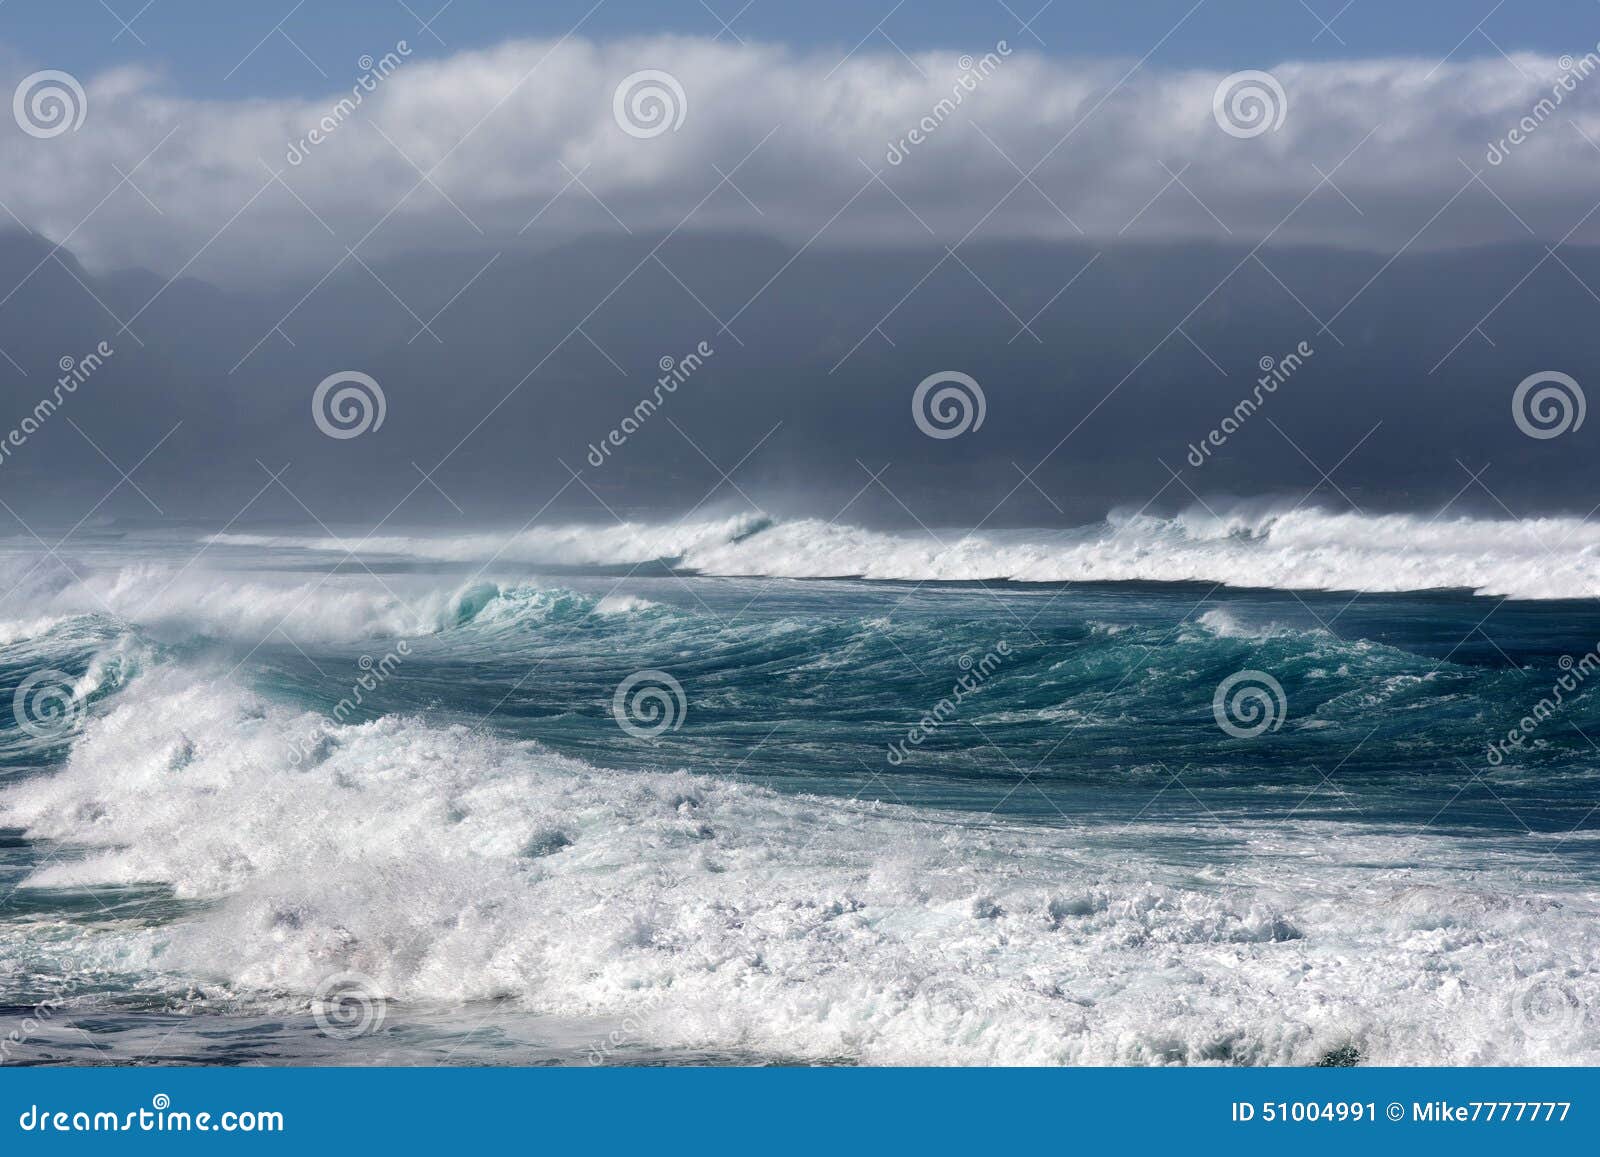 stormy seas, north shore of maui, hawaii